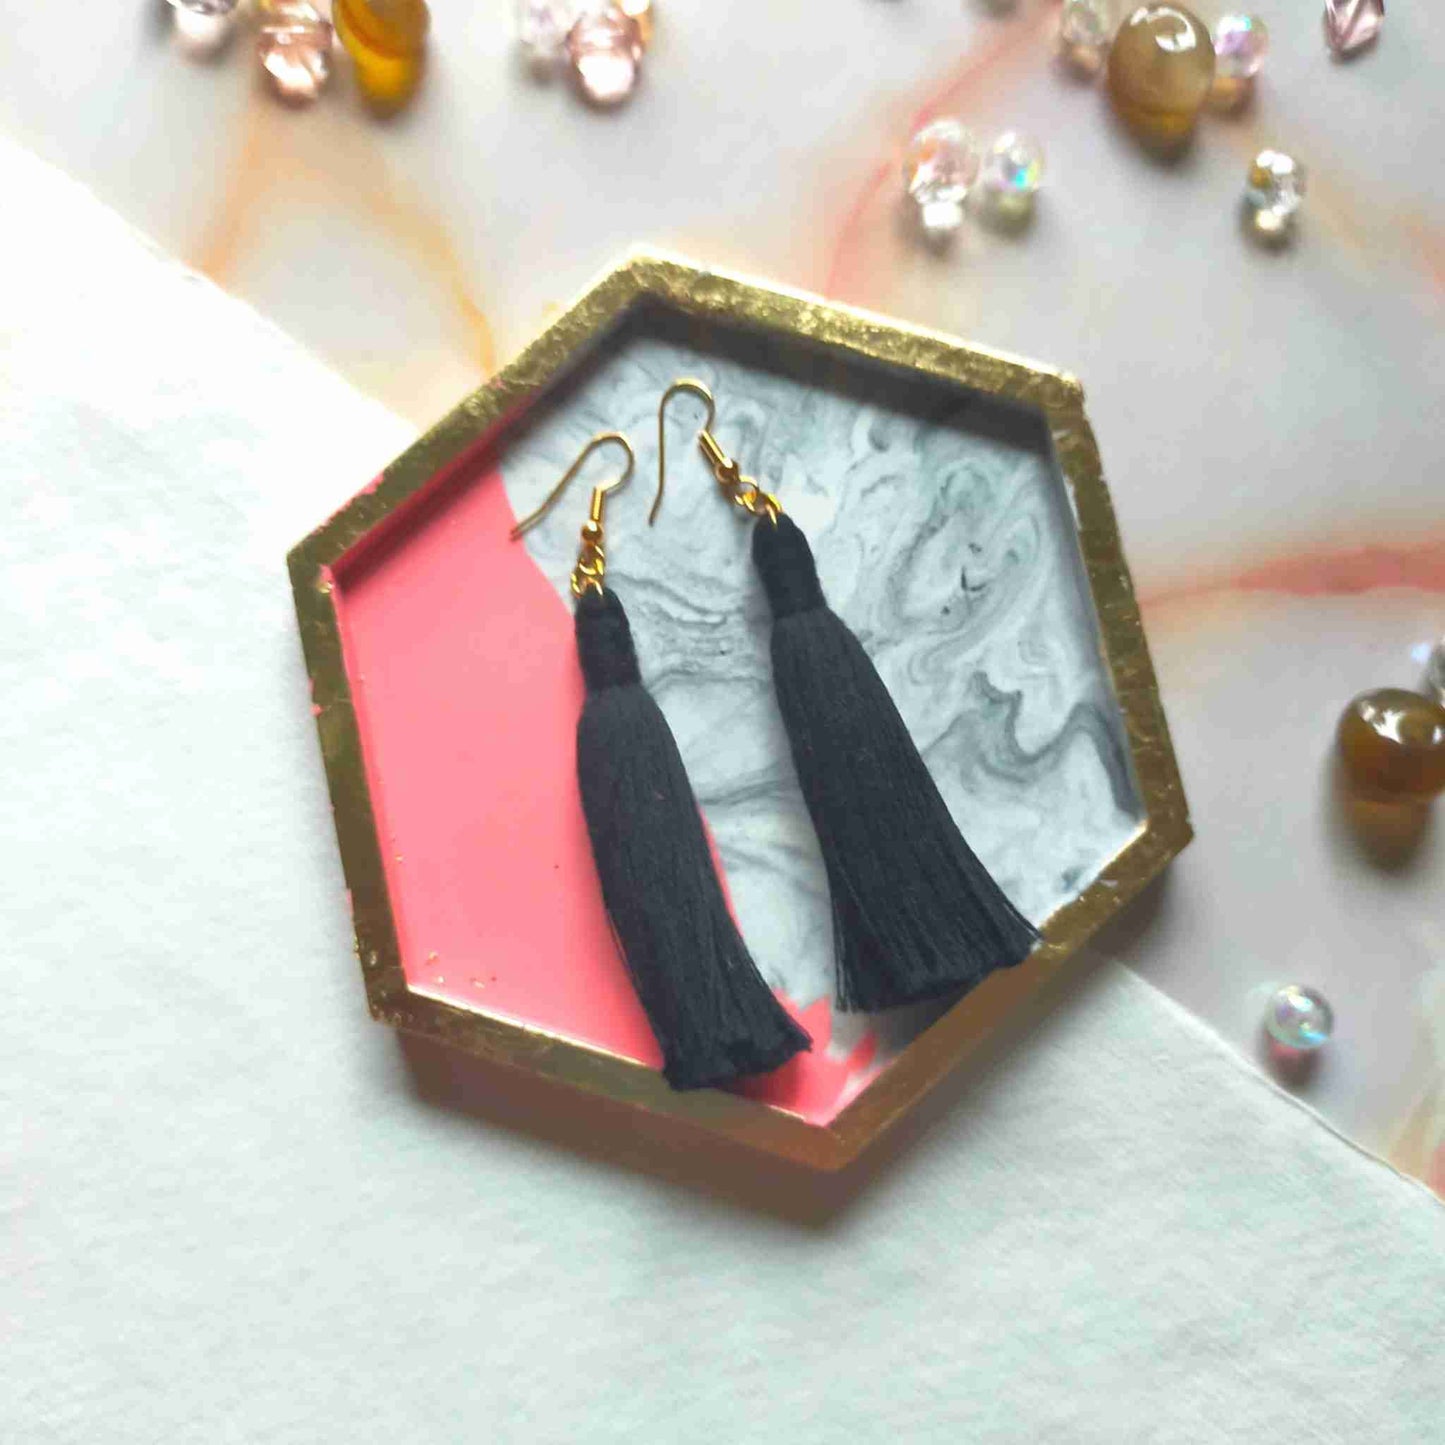 "Flint" Jesmonite Pink Colour Block, Marble & Gold Leaf Hexagon Jewellery Trinket Tray